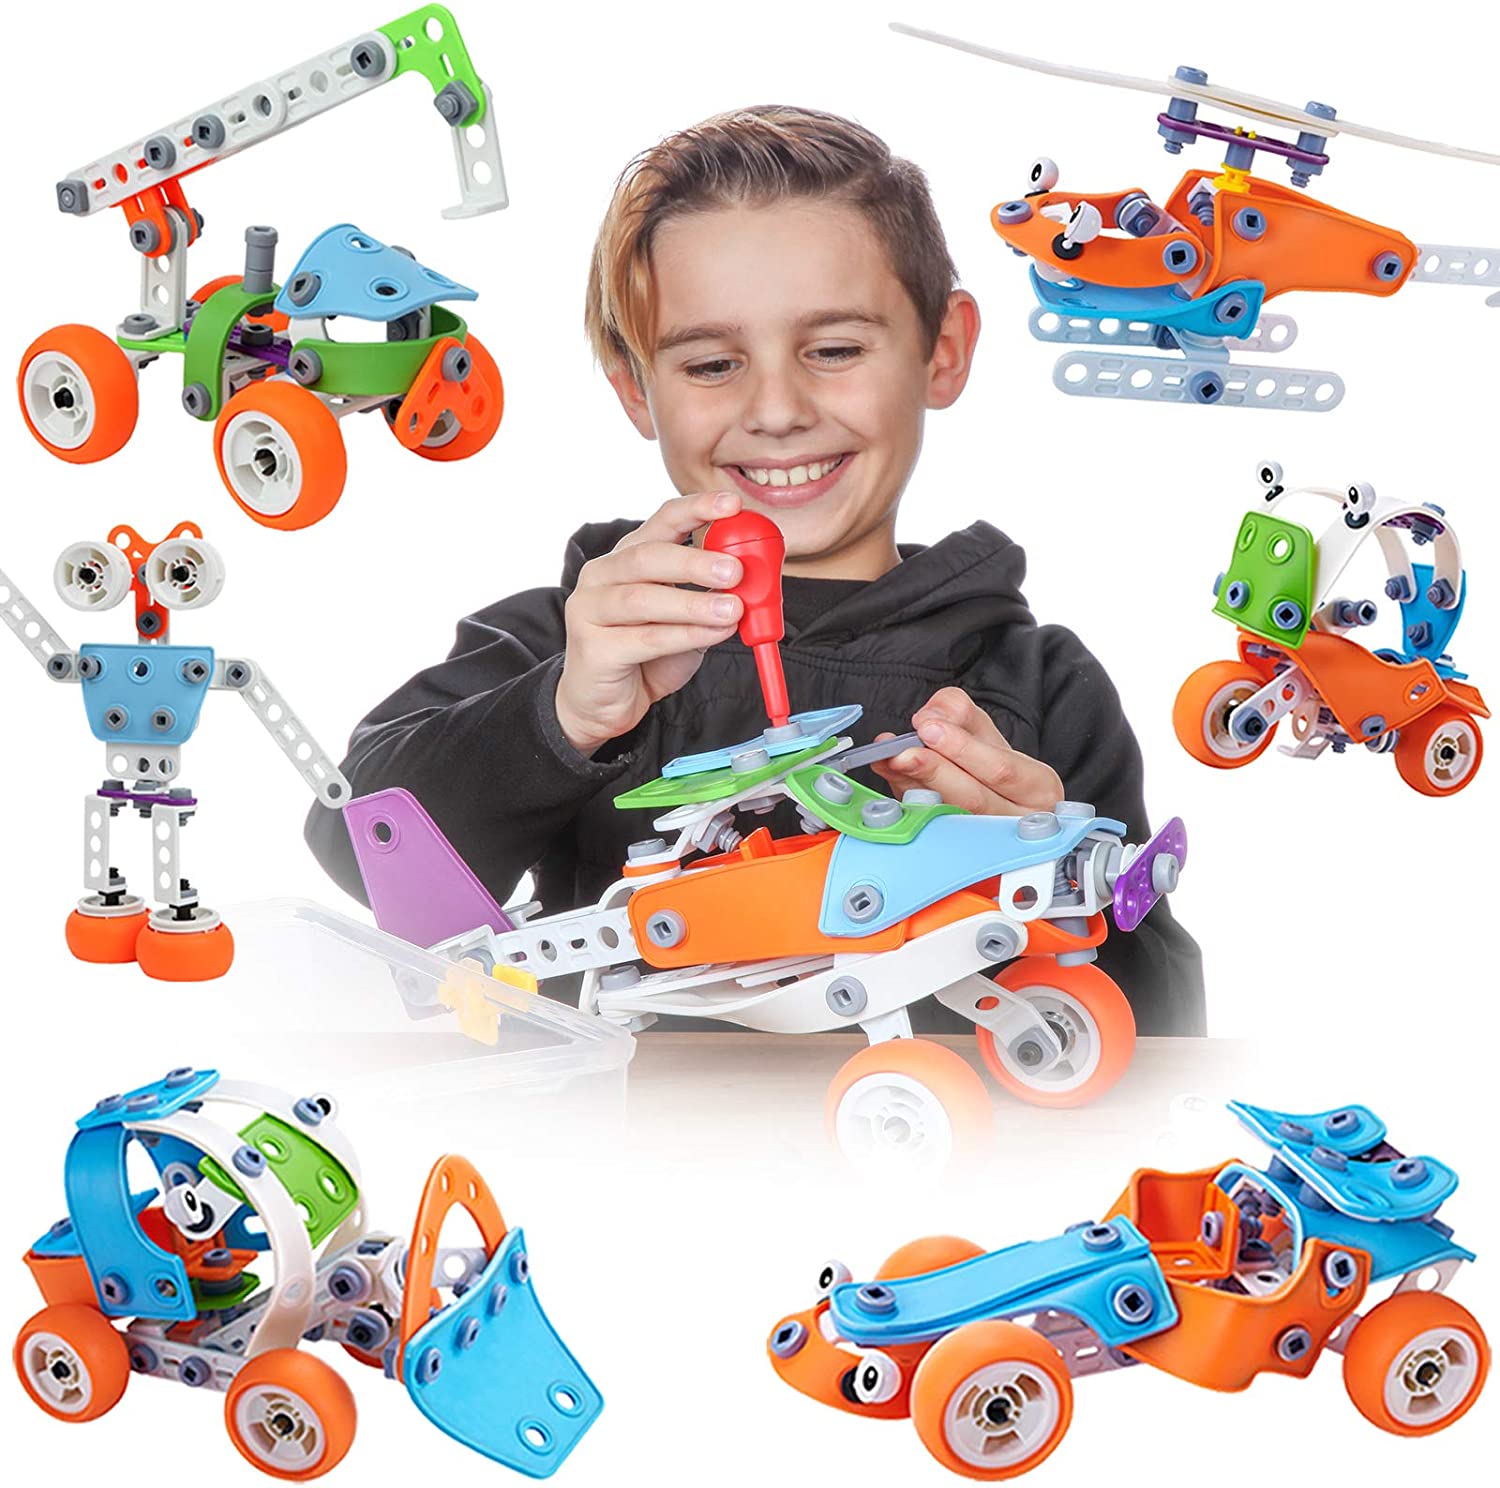 Toy Pal STEM Educational Building Toys